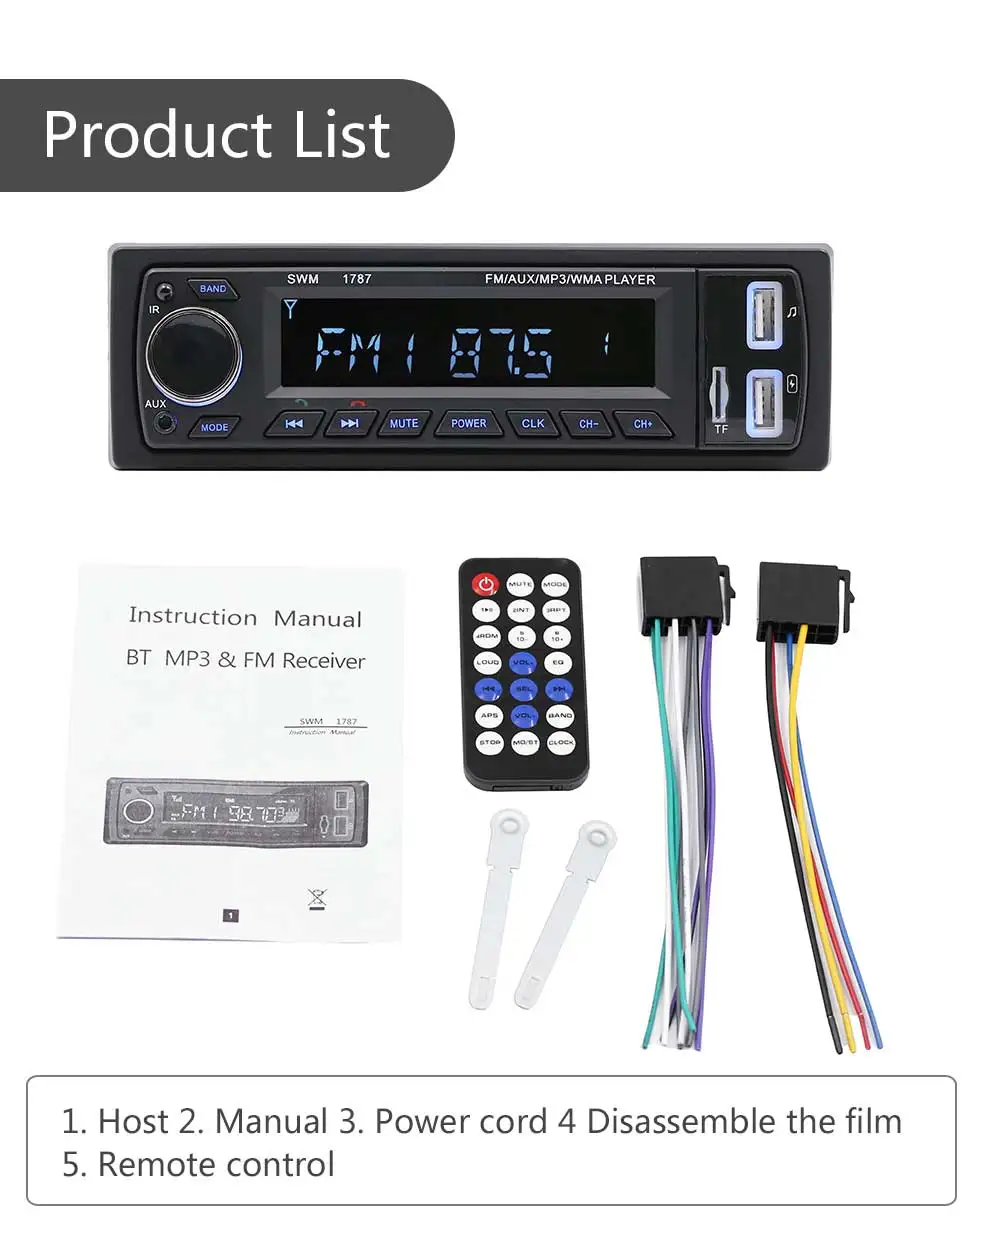 Car Radio Stereo Player Bluetooth Phone AUX-IN MP3 FM/USB/1 Din/remote control 12V Car Audio Auto Stereo